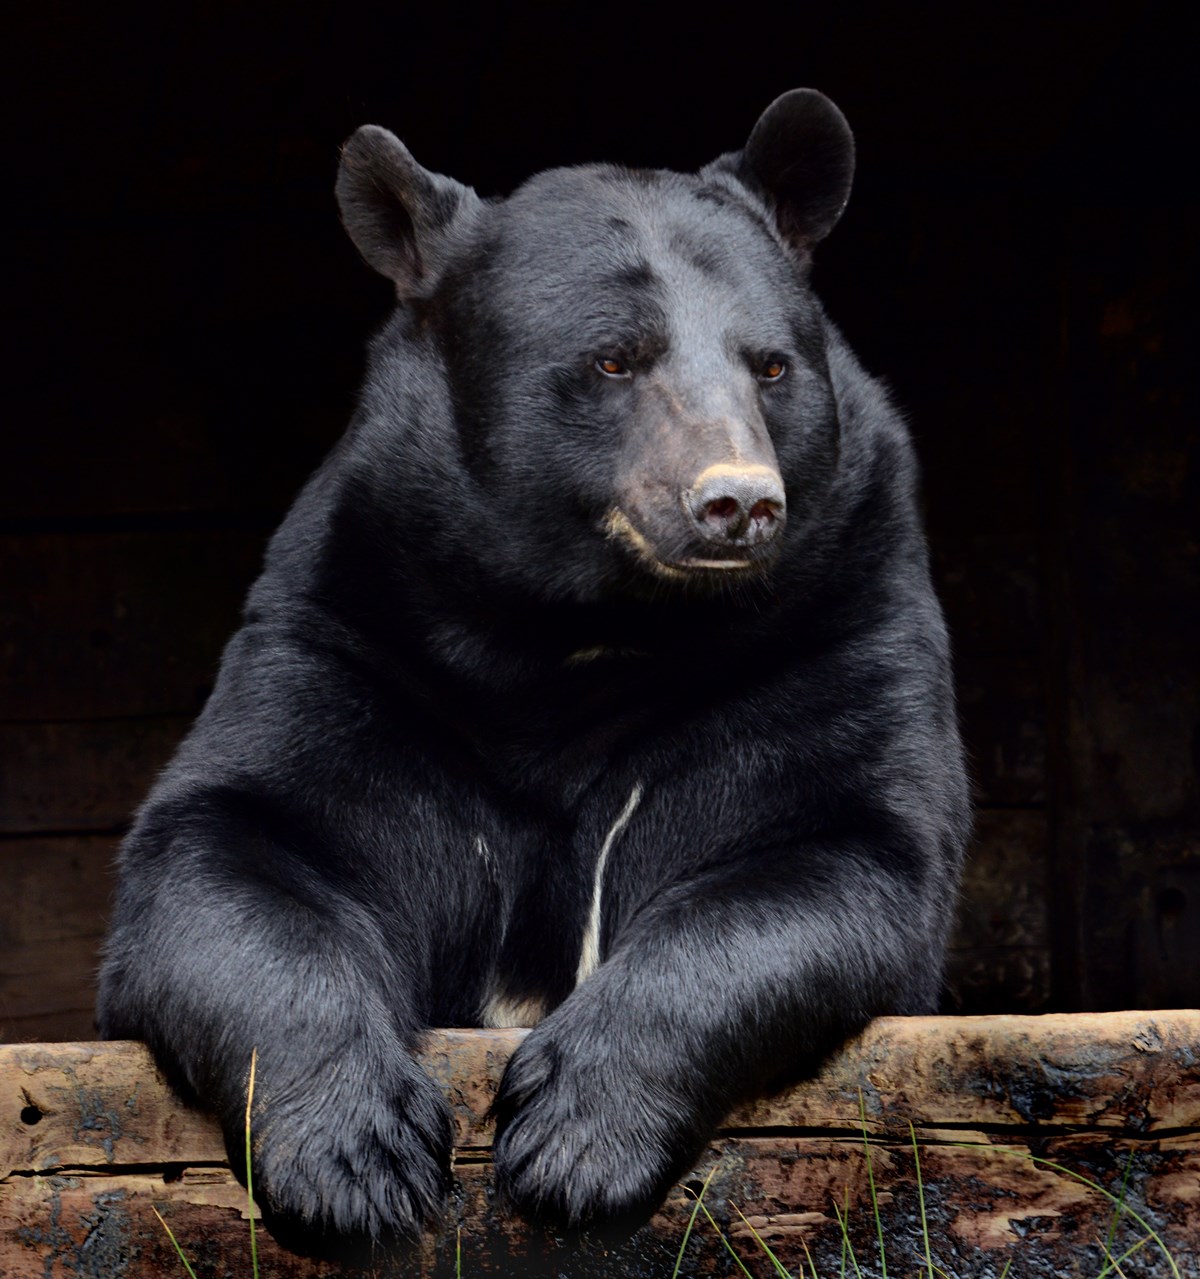 Image of black bear portrait